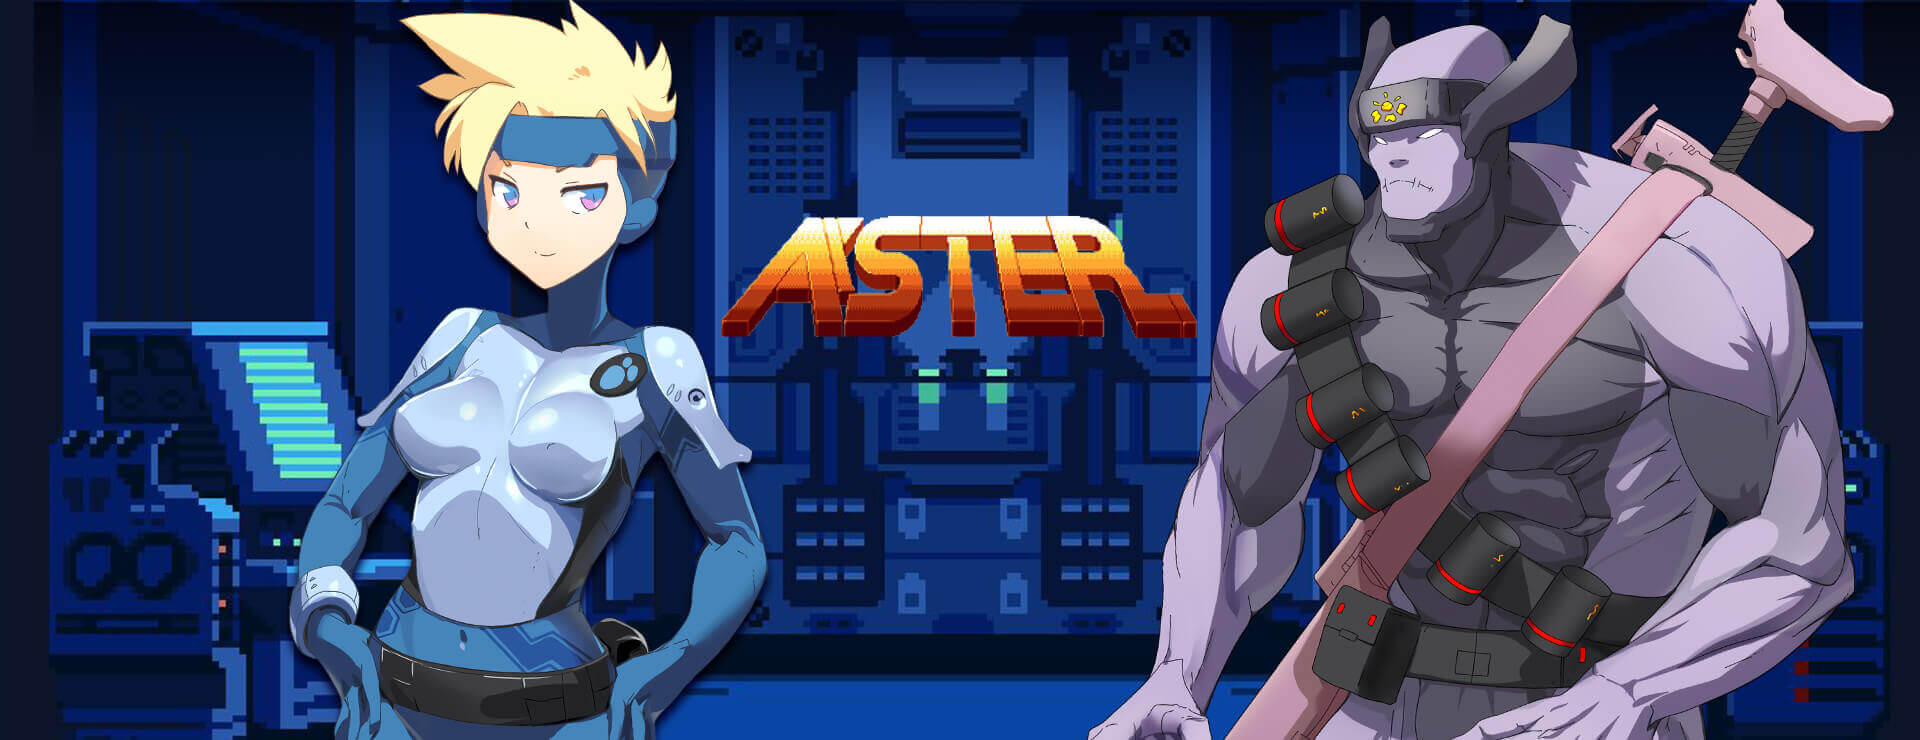 Aster - アクションアドベンチャー ゲーム